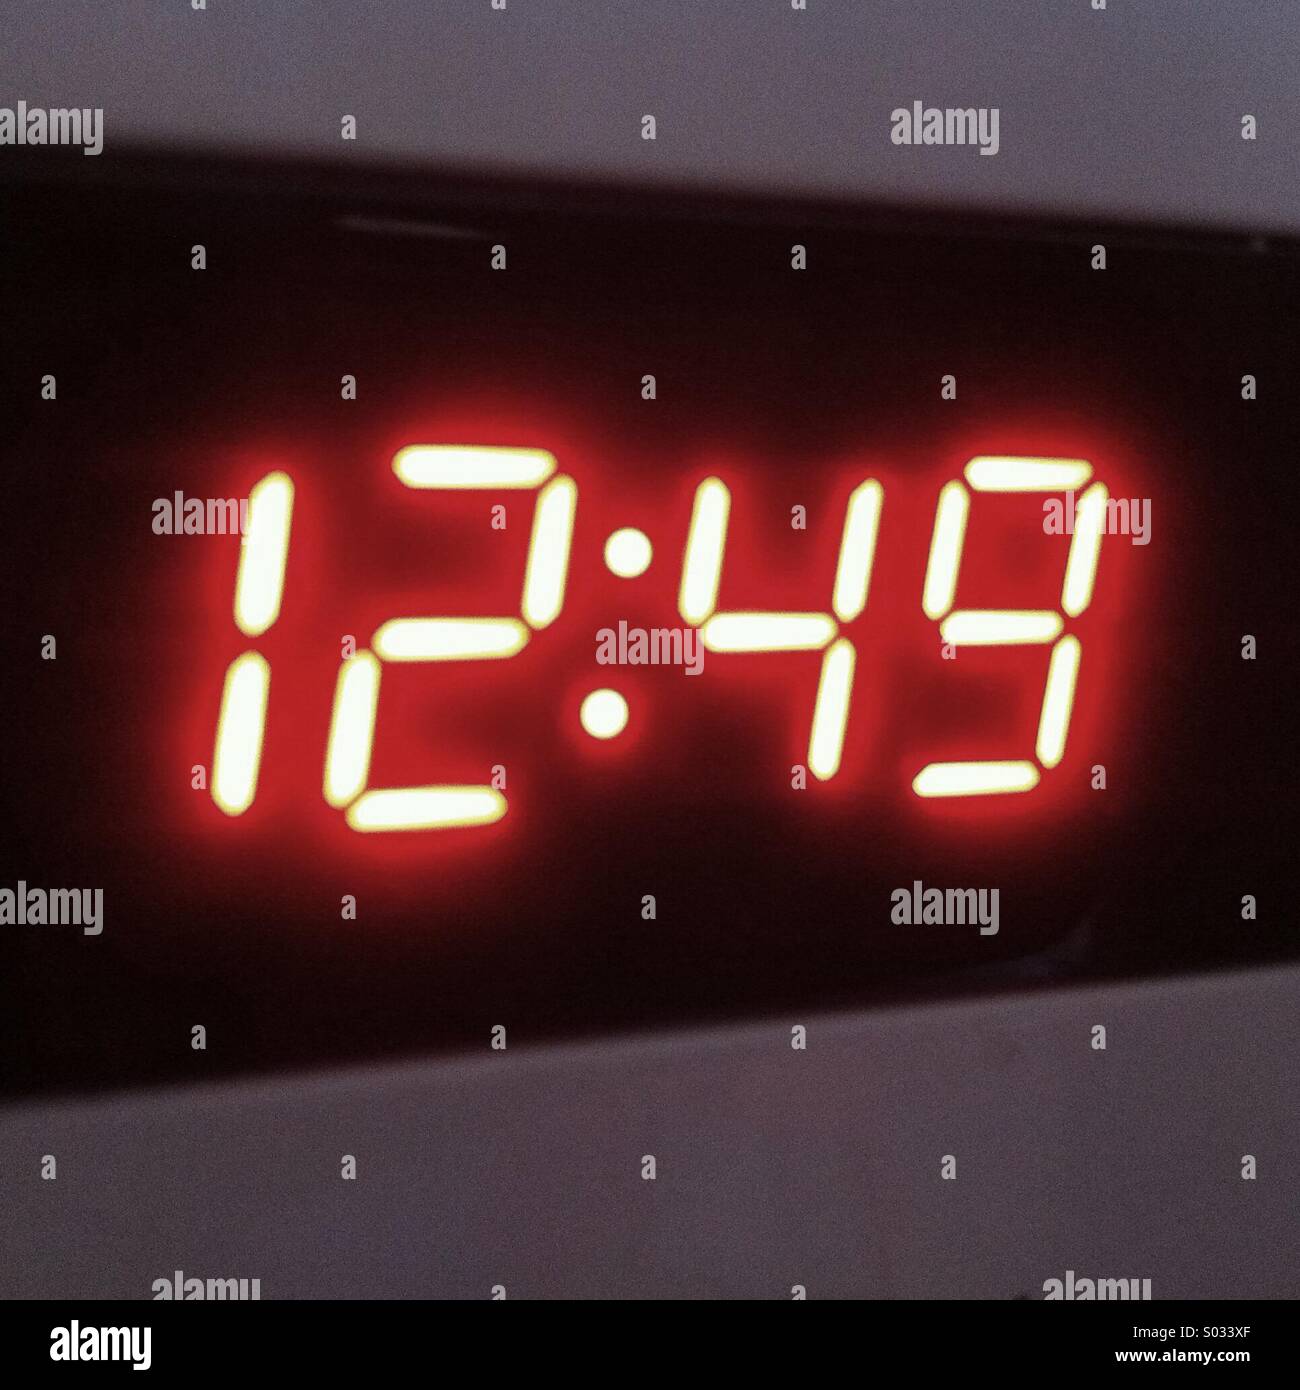 Cronometro / Orologio LED (Timer) per uso interno